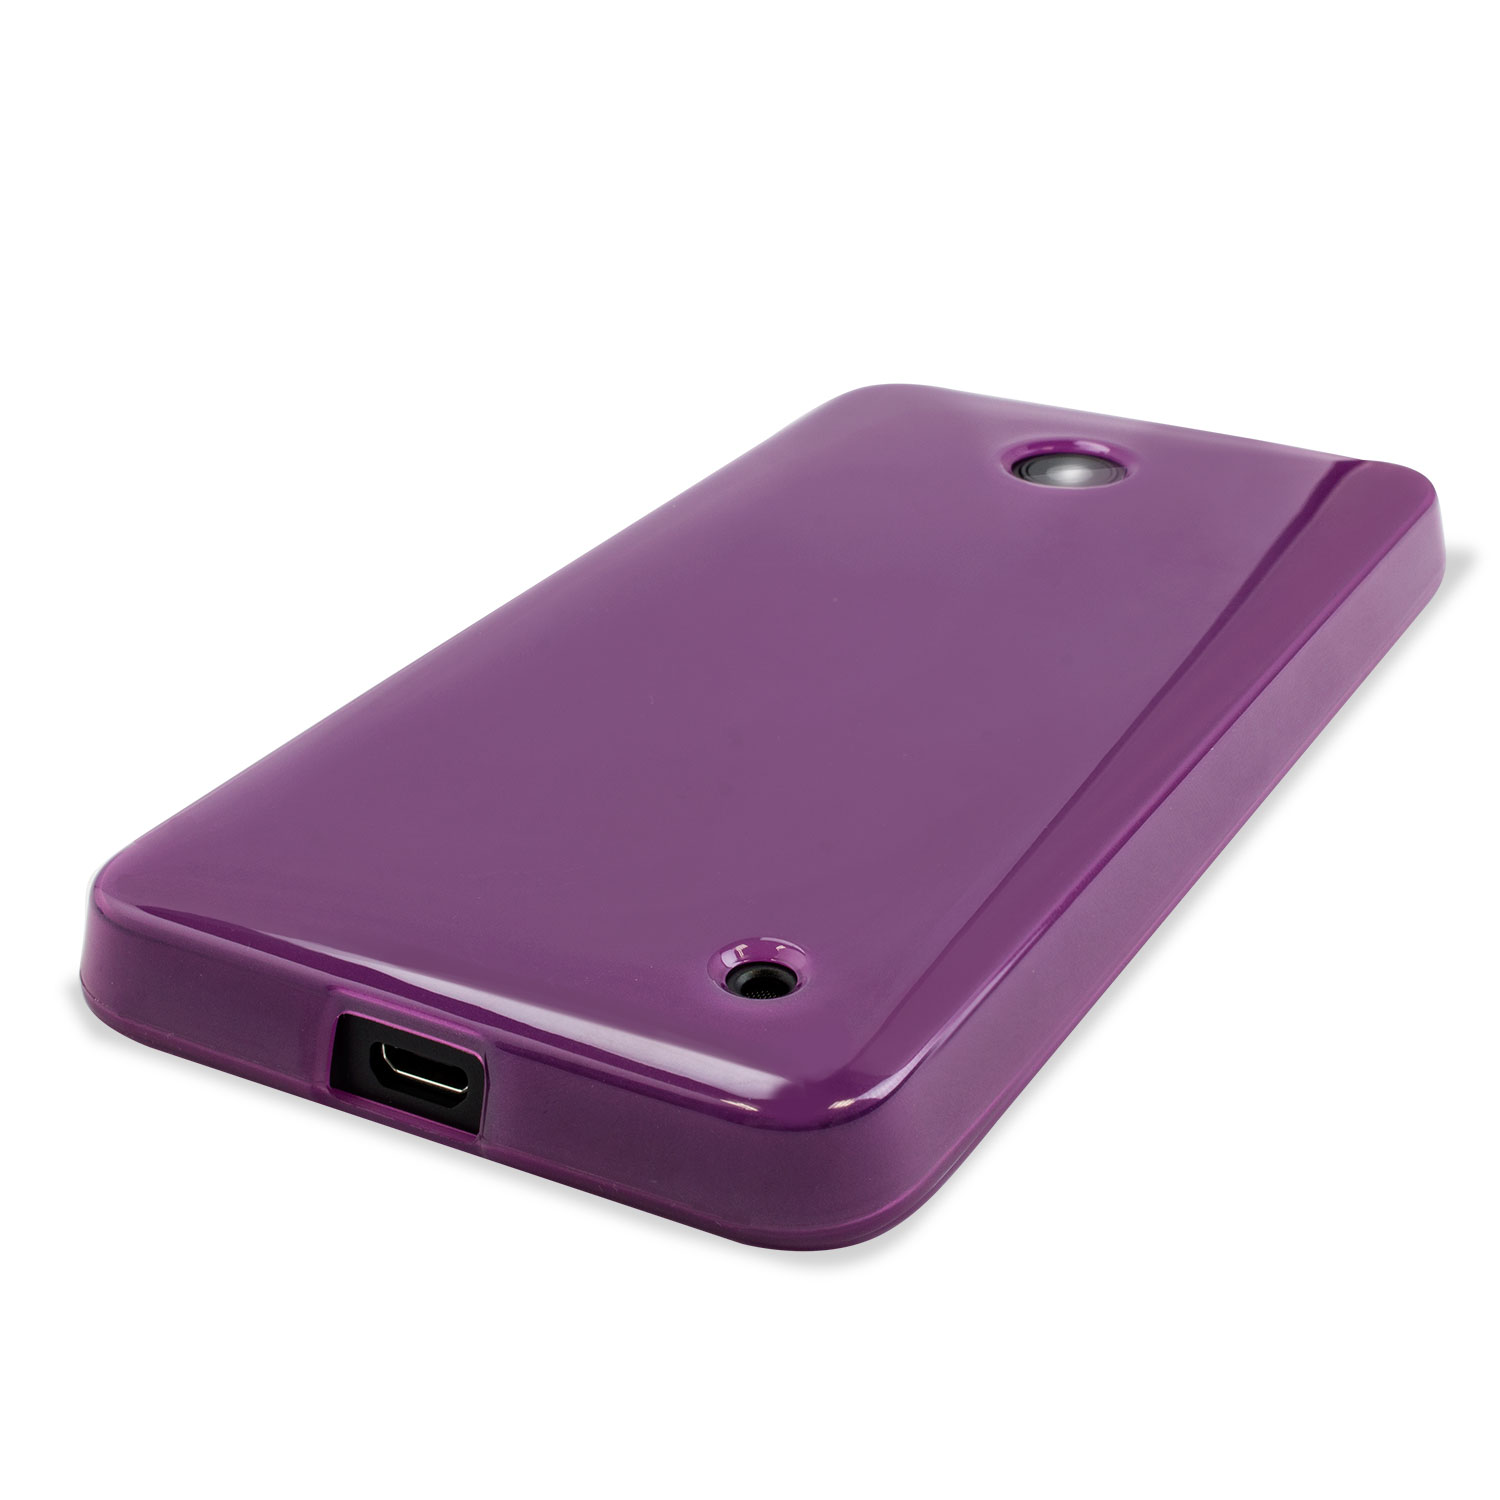 Flexishield Nokia Lumia 635 / 630 Gel Case - Purple